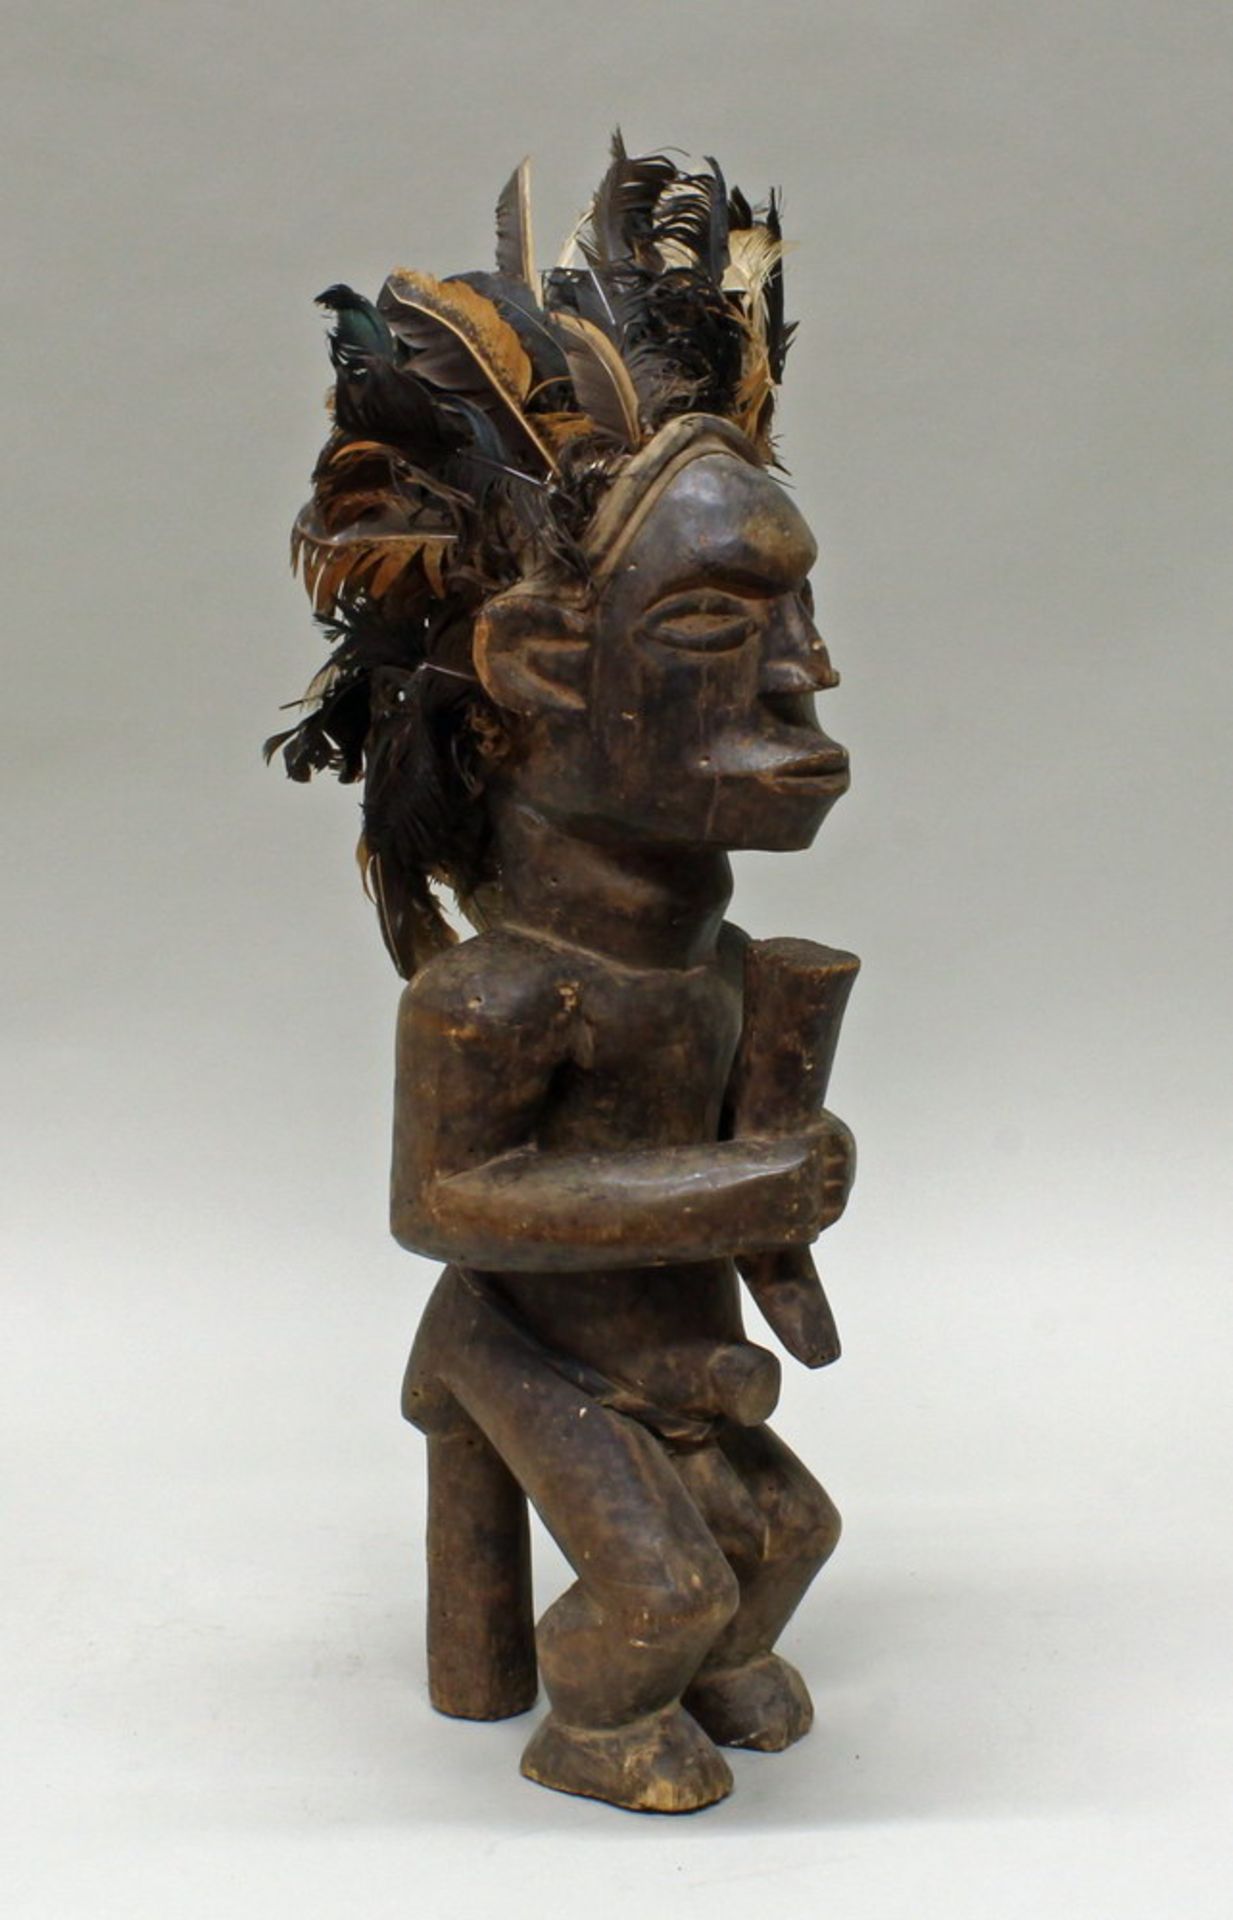 Sitzende Figur, mit Federschmuck, Fang, Afrika, Holz, ca. 50 cm hoch. Provenienz: Privatsammlung - Bild 2 aus 4